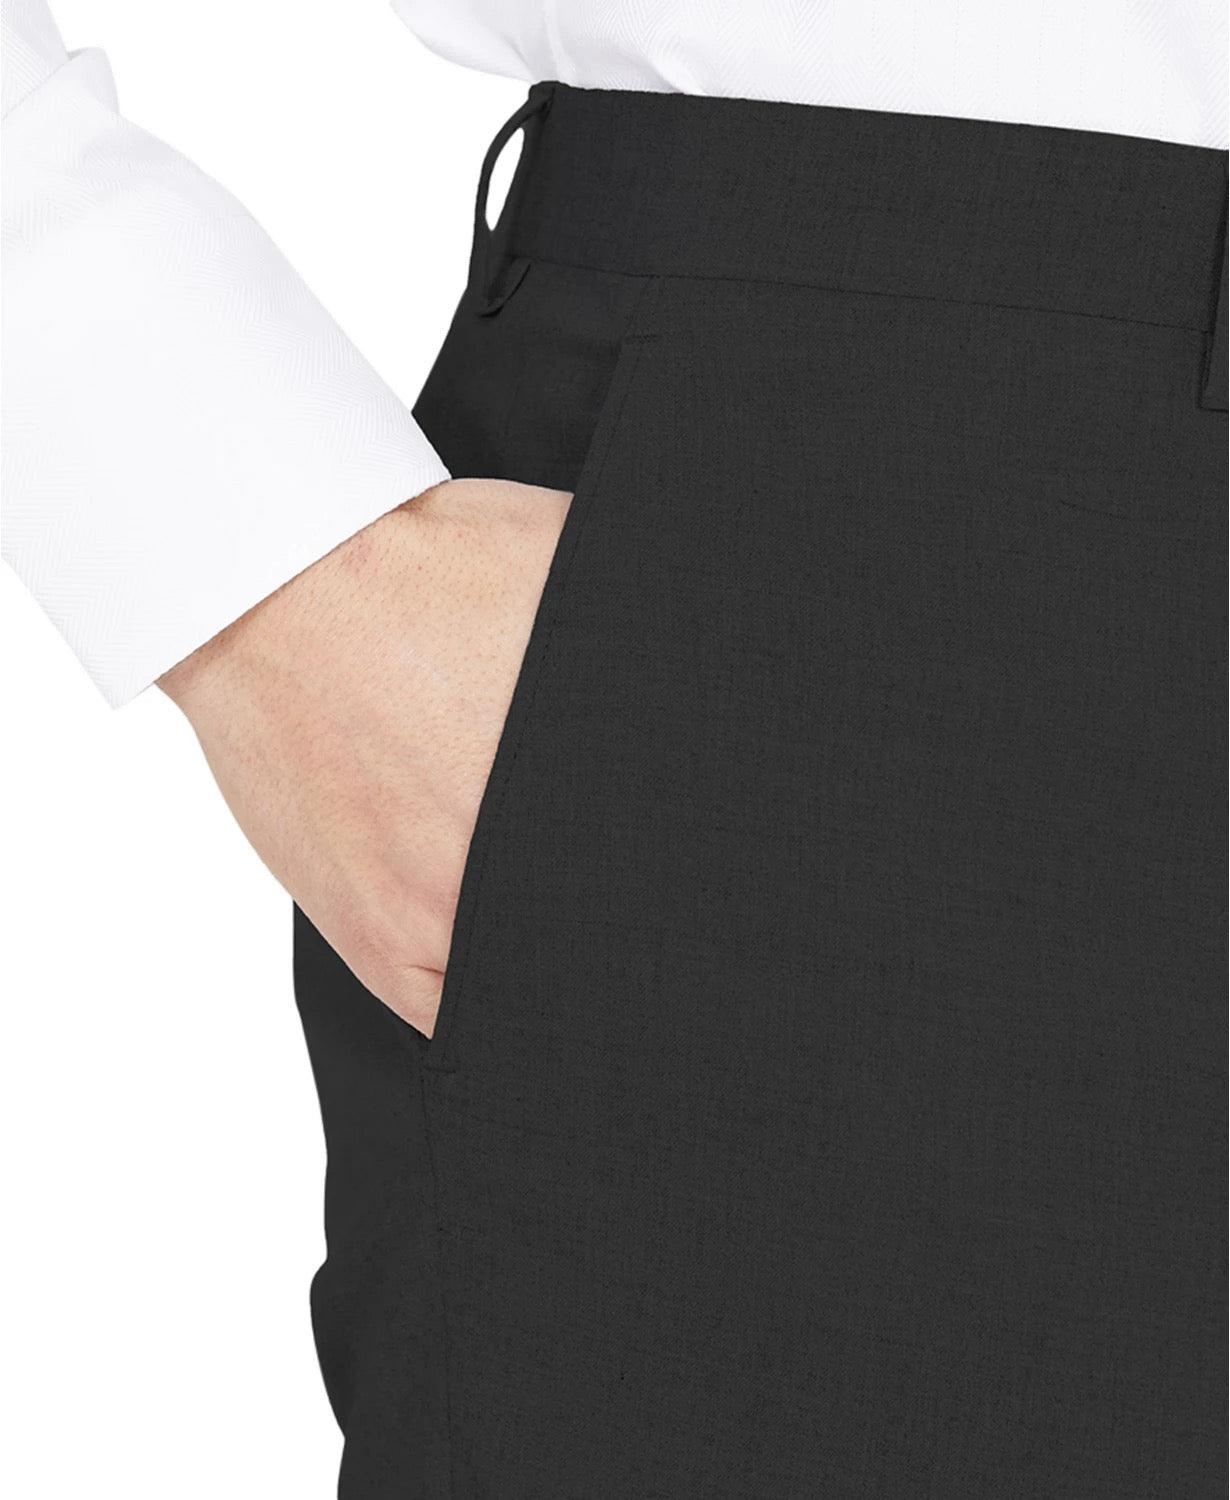 DKNY Men's Dress Pants Black 31 x 30 Modern Fit Stretch Flat Front Solid